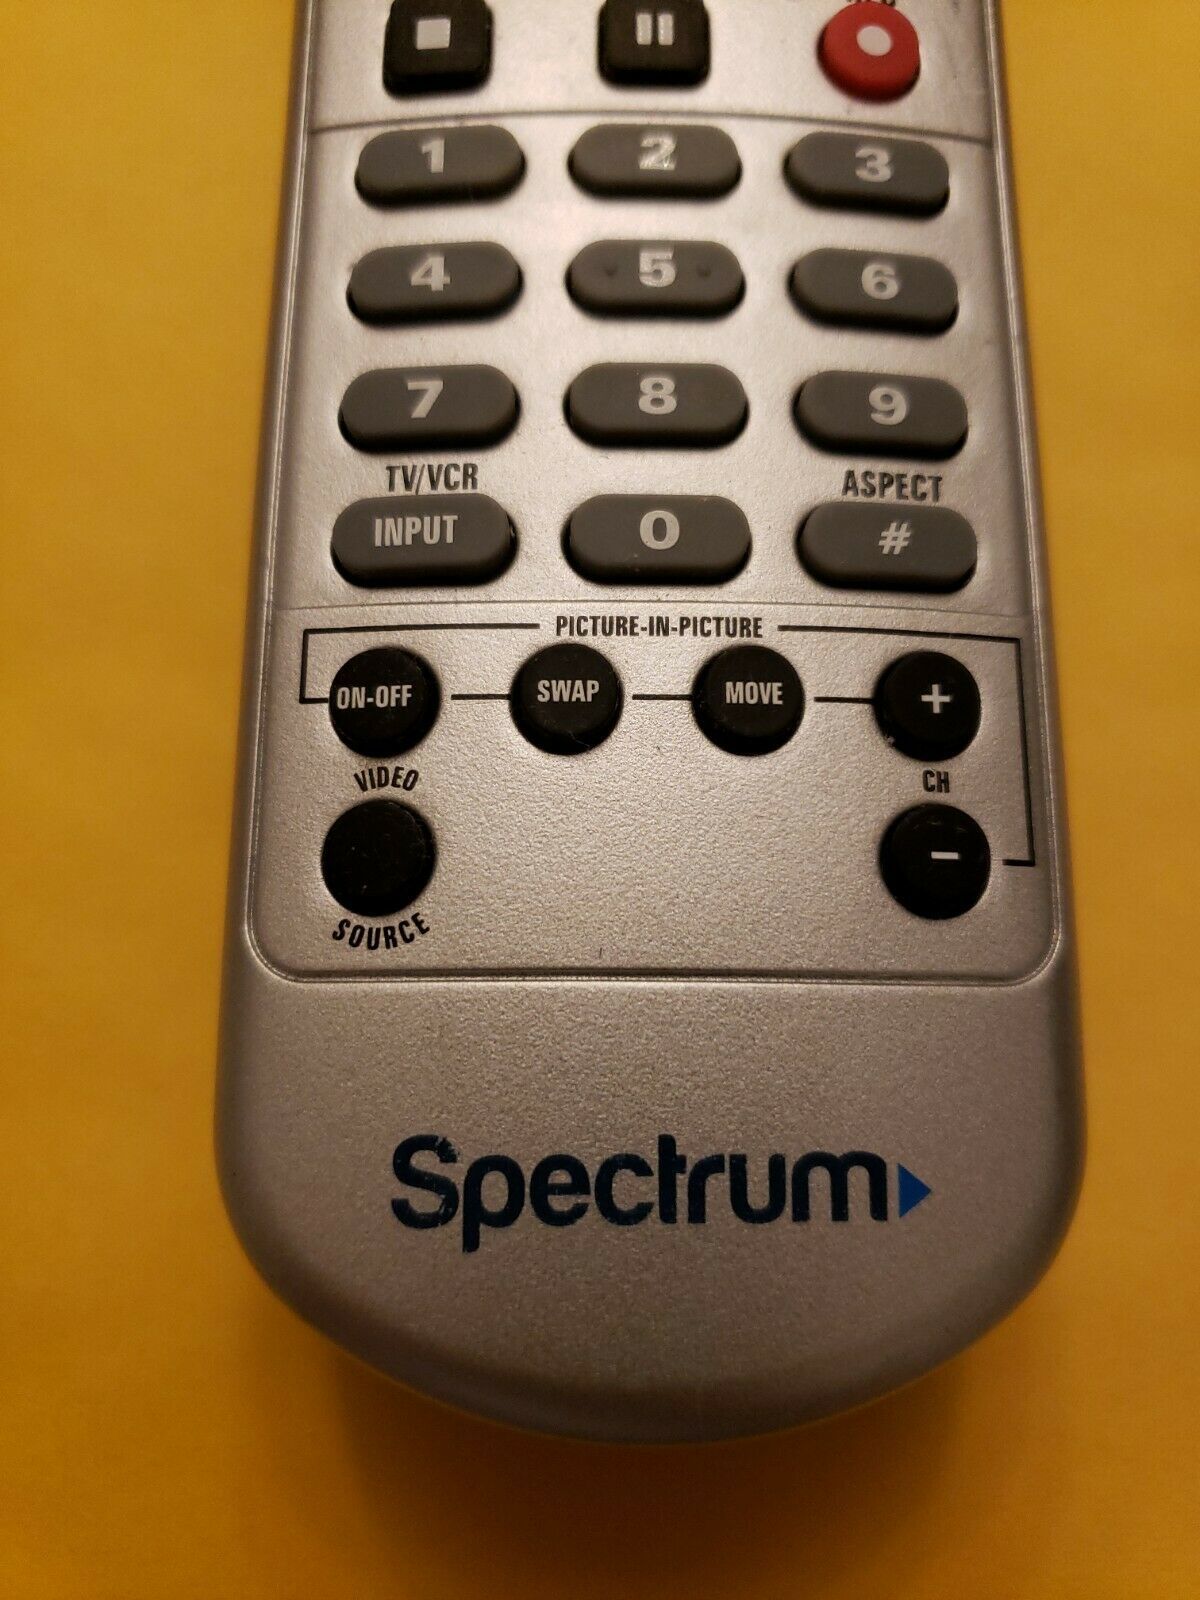 spectrum remote buttons